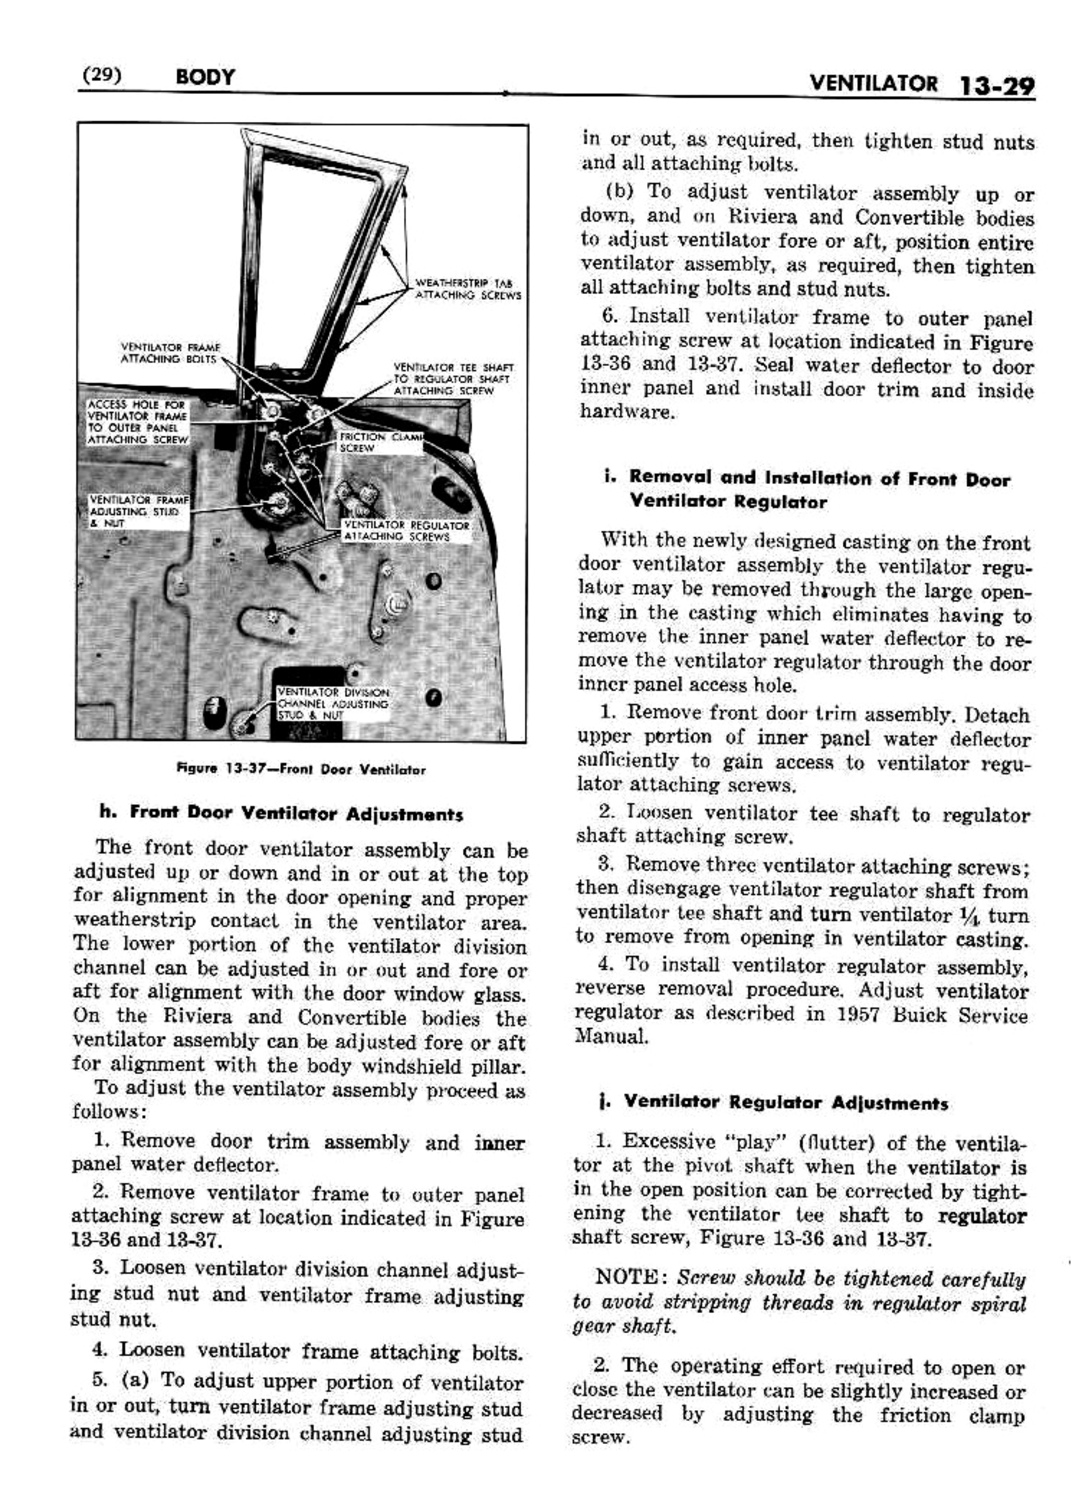 n_1958 Buick Body Service Manual-030-030.jpg